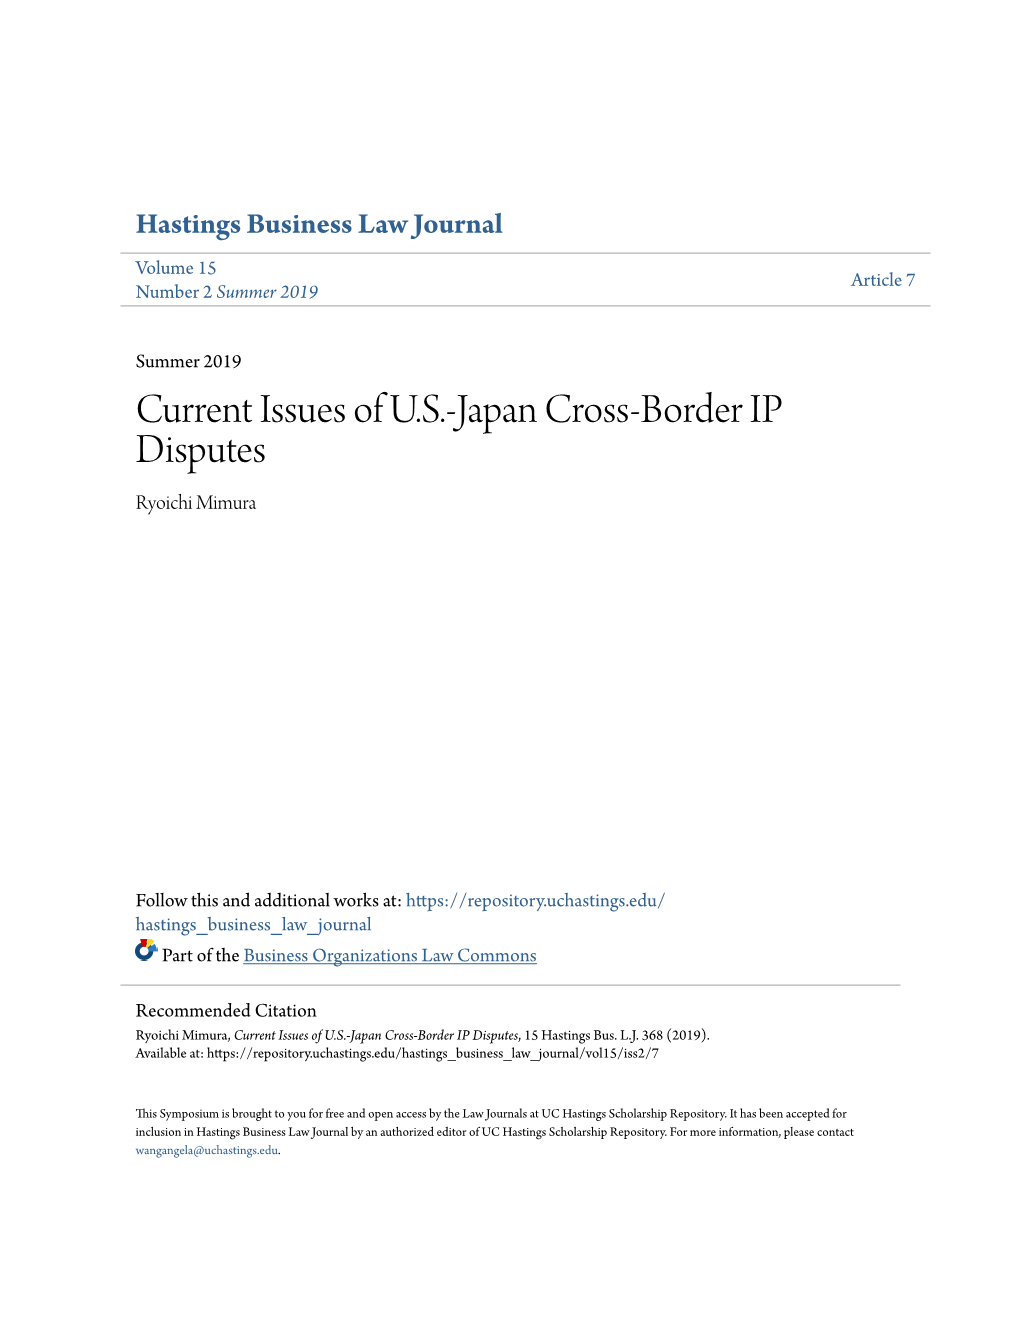 Current Issues of U.S.-Japan Cross-Border IP Disputes Ryoichi Mimura